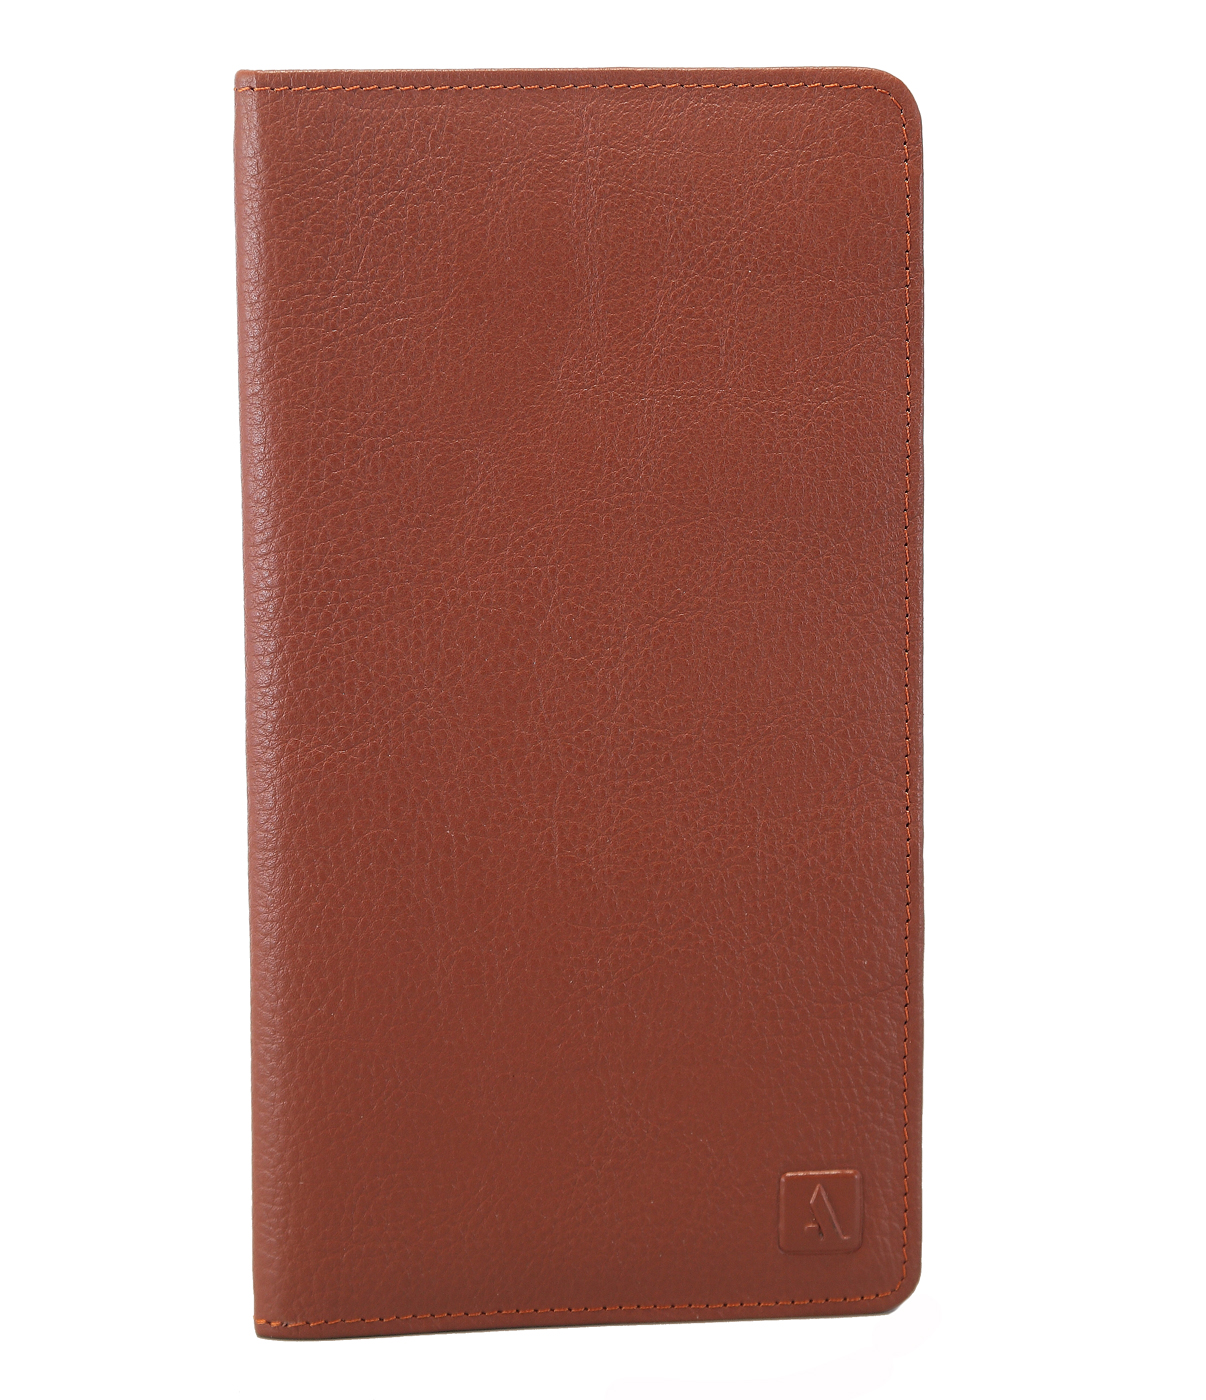 W85-Rafel-Travel Document Wallet In Genuine Leather - Tan